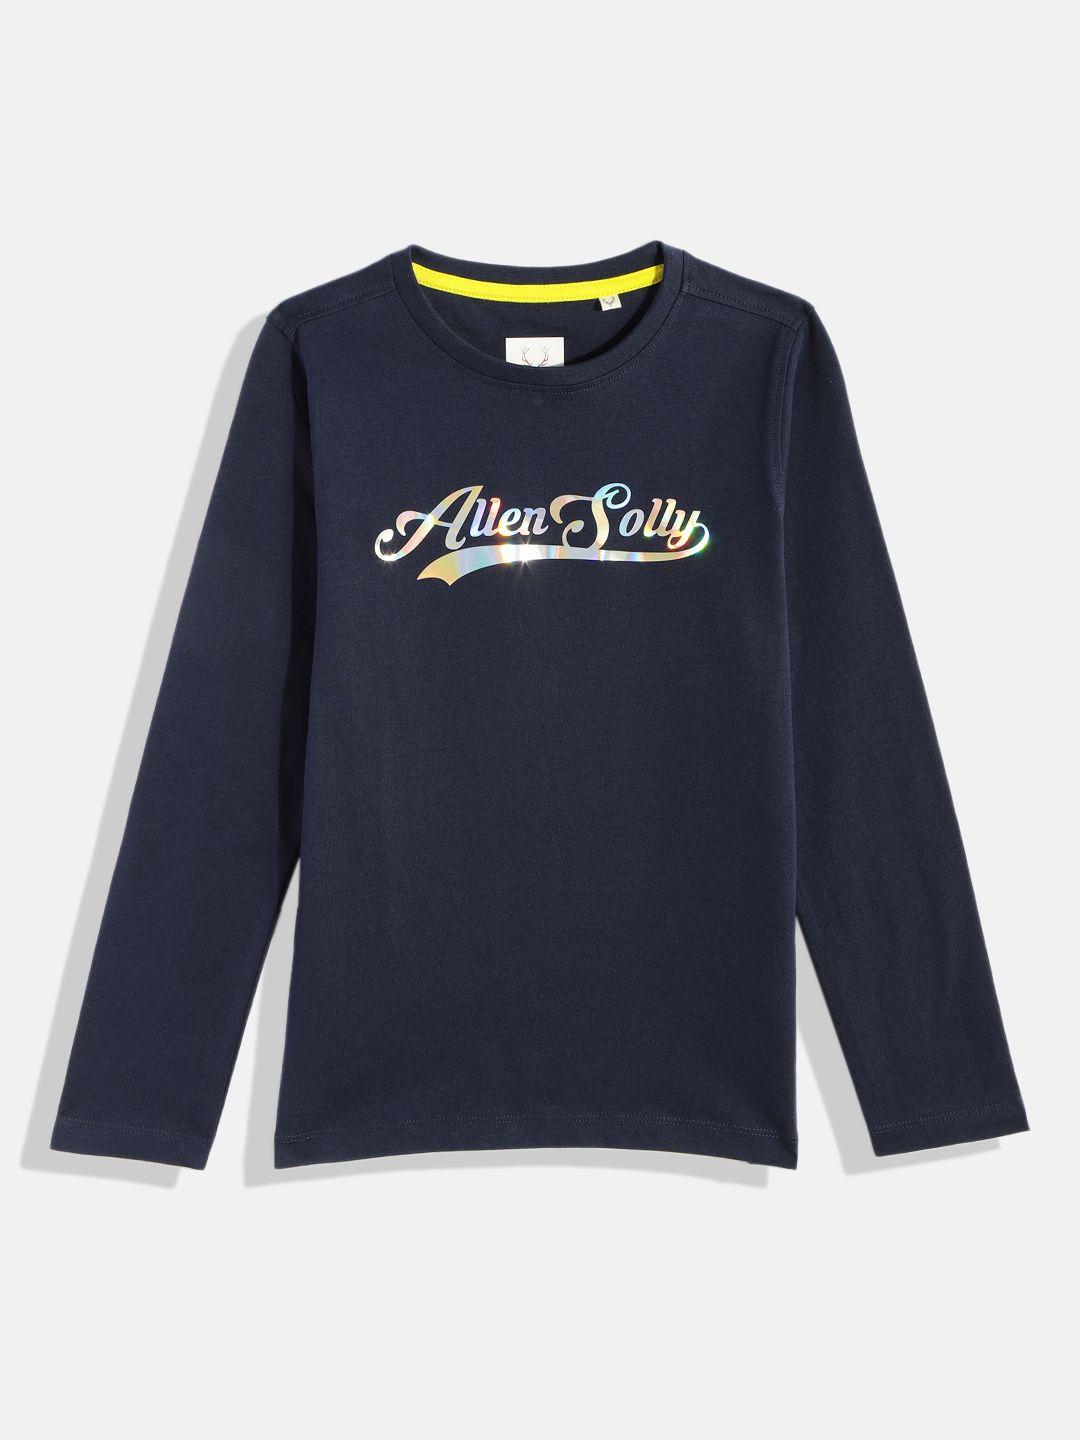 allen solly junior boys navy blue brand logo printed pure cotton t-shirt